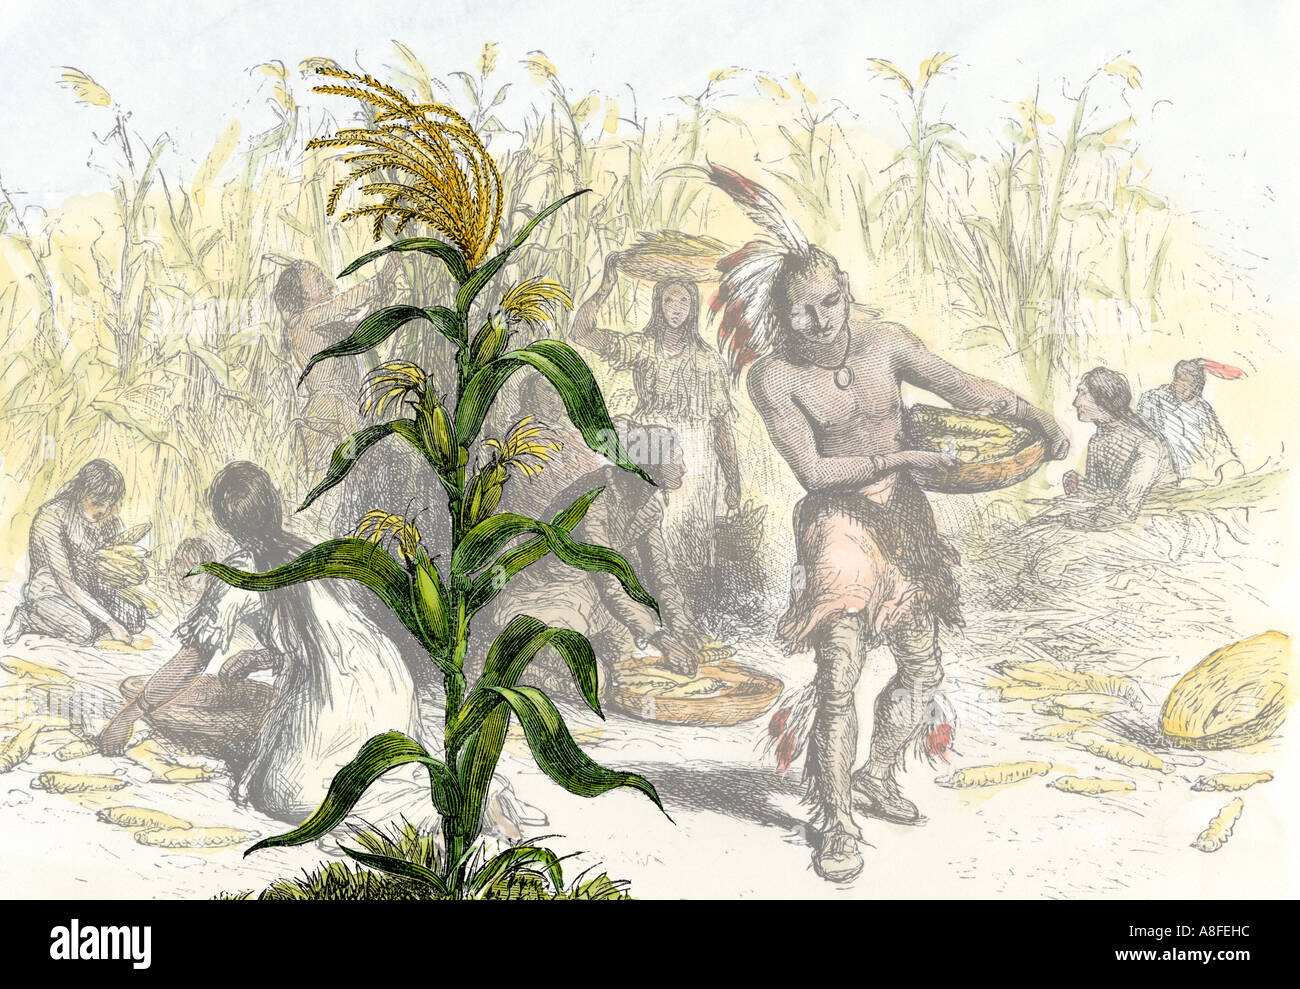 Korn oder Mais das Grundnahrungsmittel der Native Americans. Handkolorierte Holzschnitte digital kombiniert Stockfoto